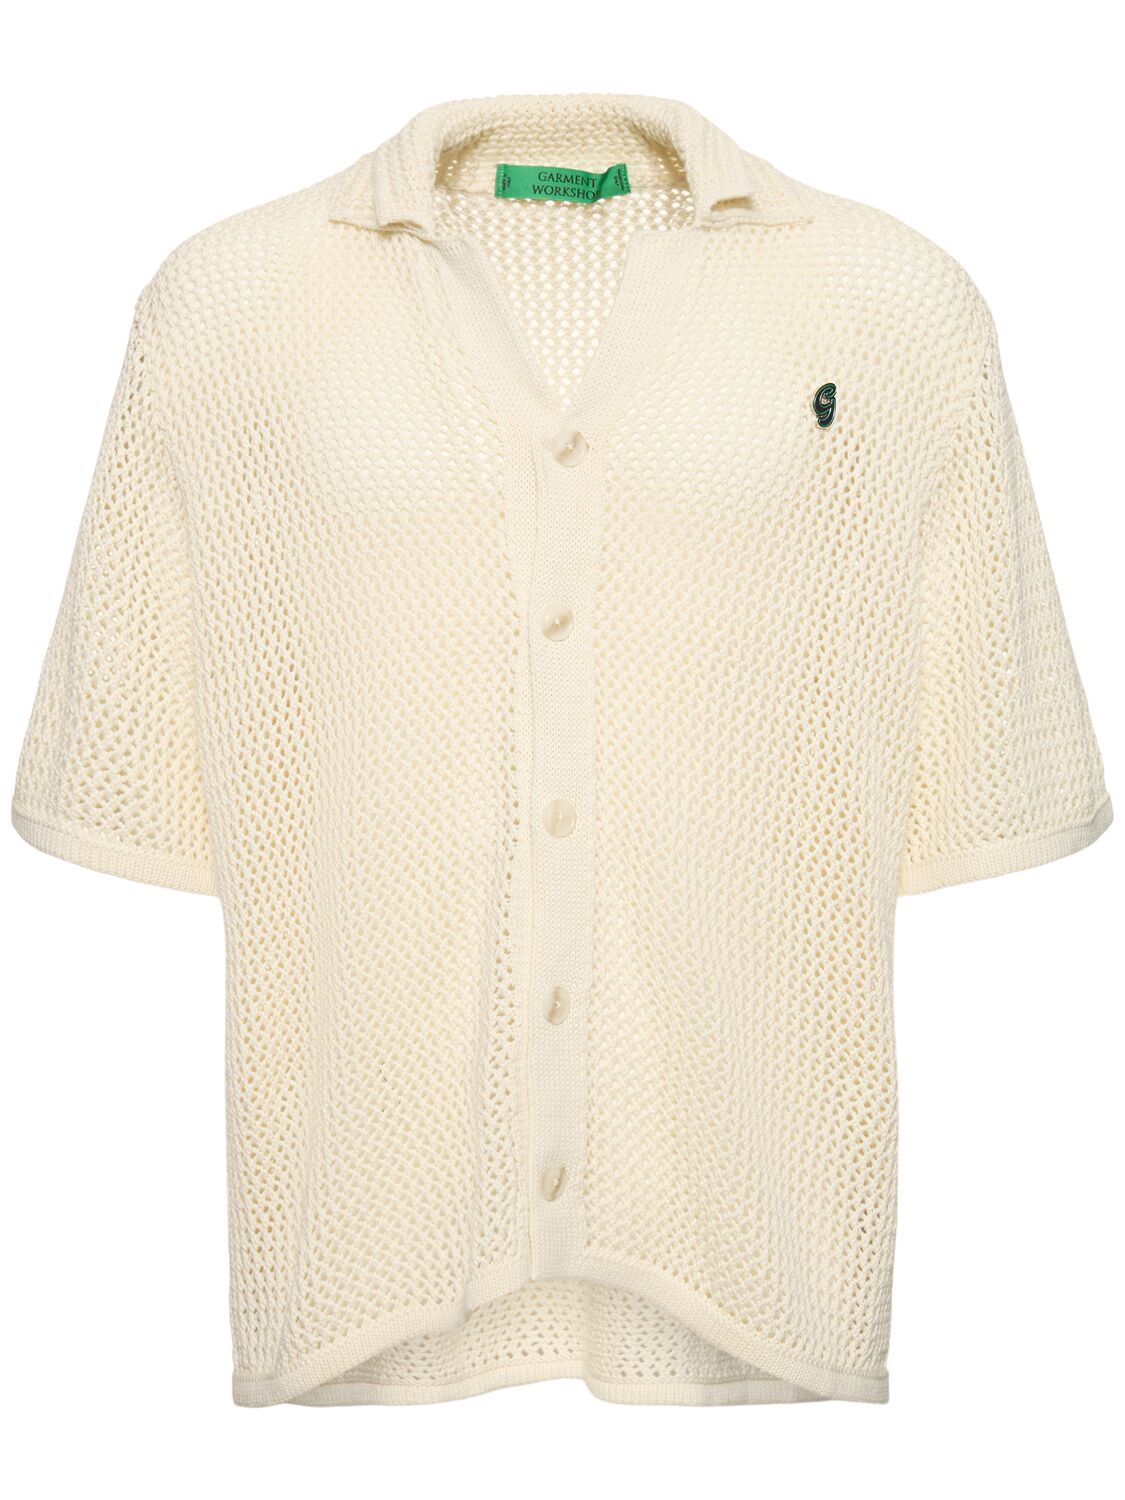 Image of Knitted Crochet Short Sleeve Shirt